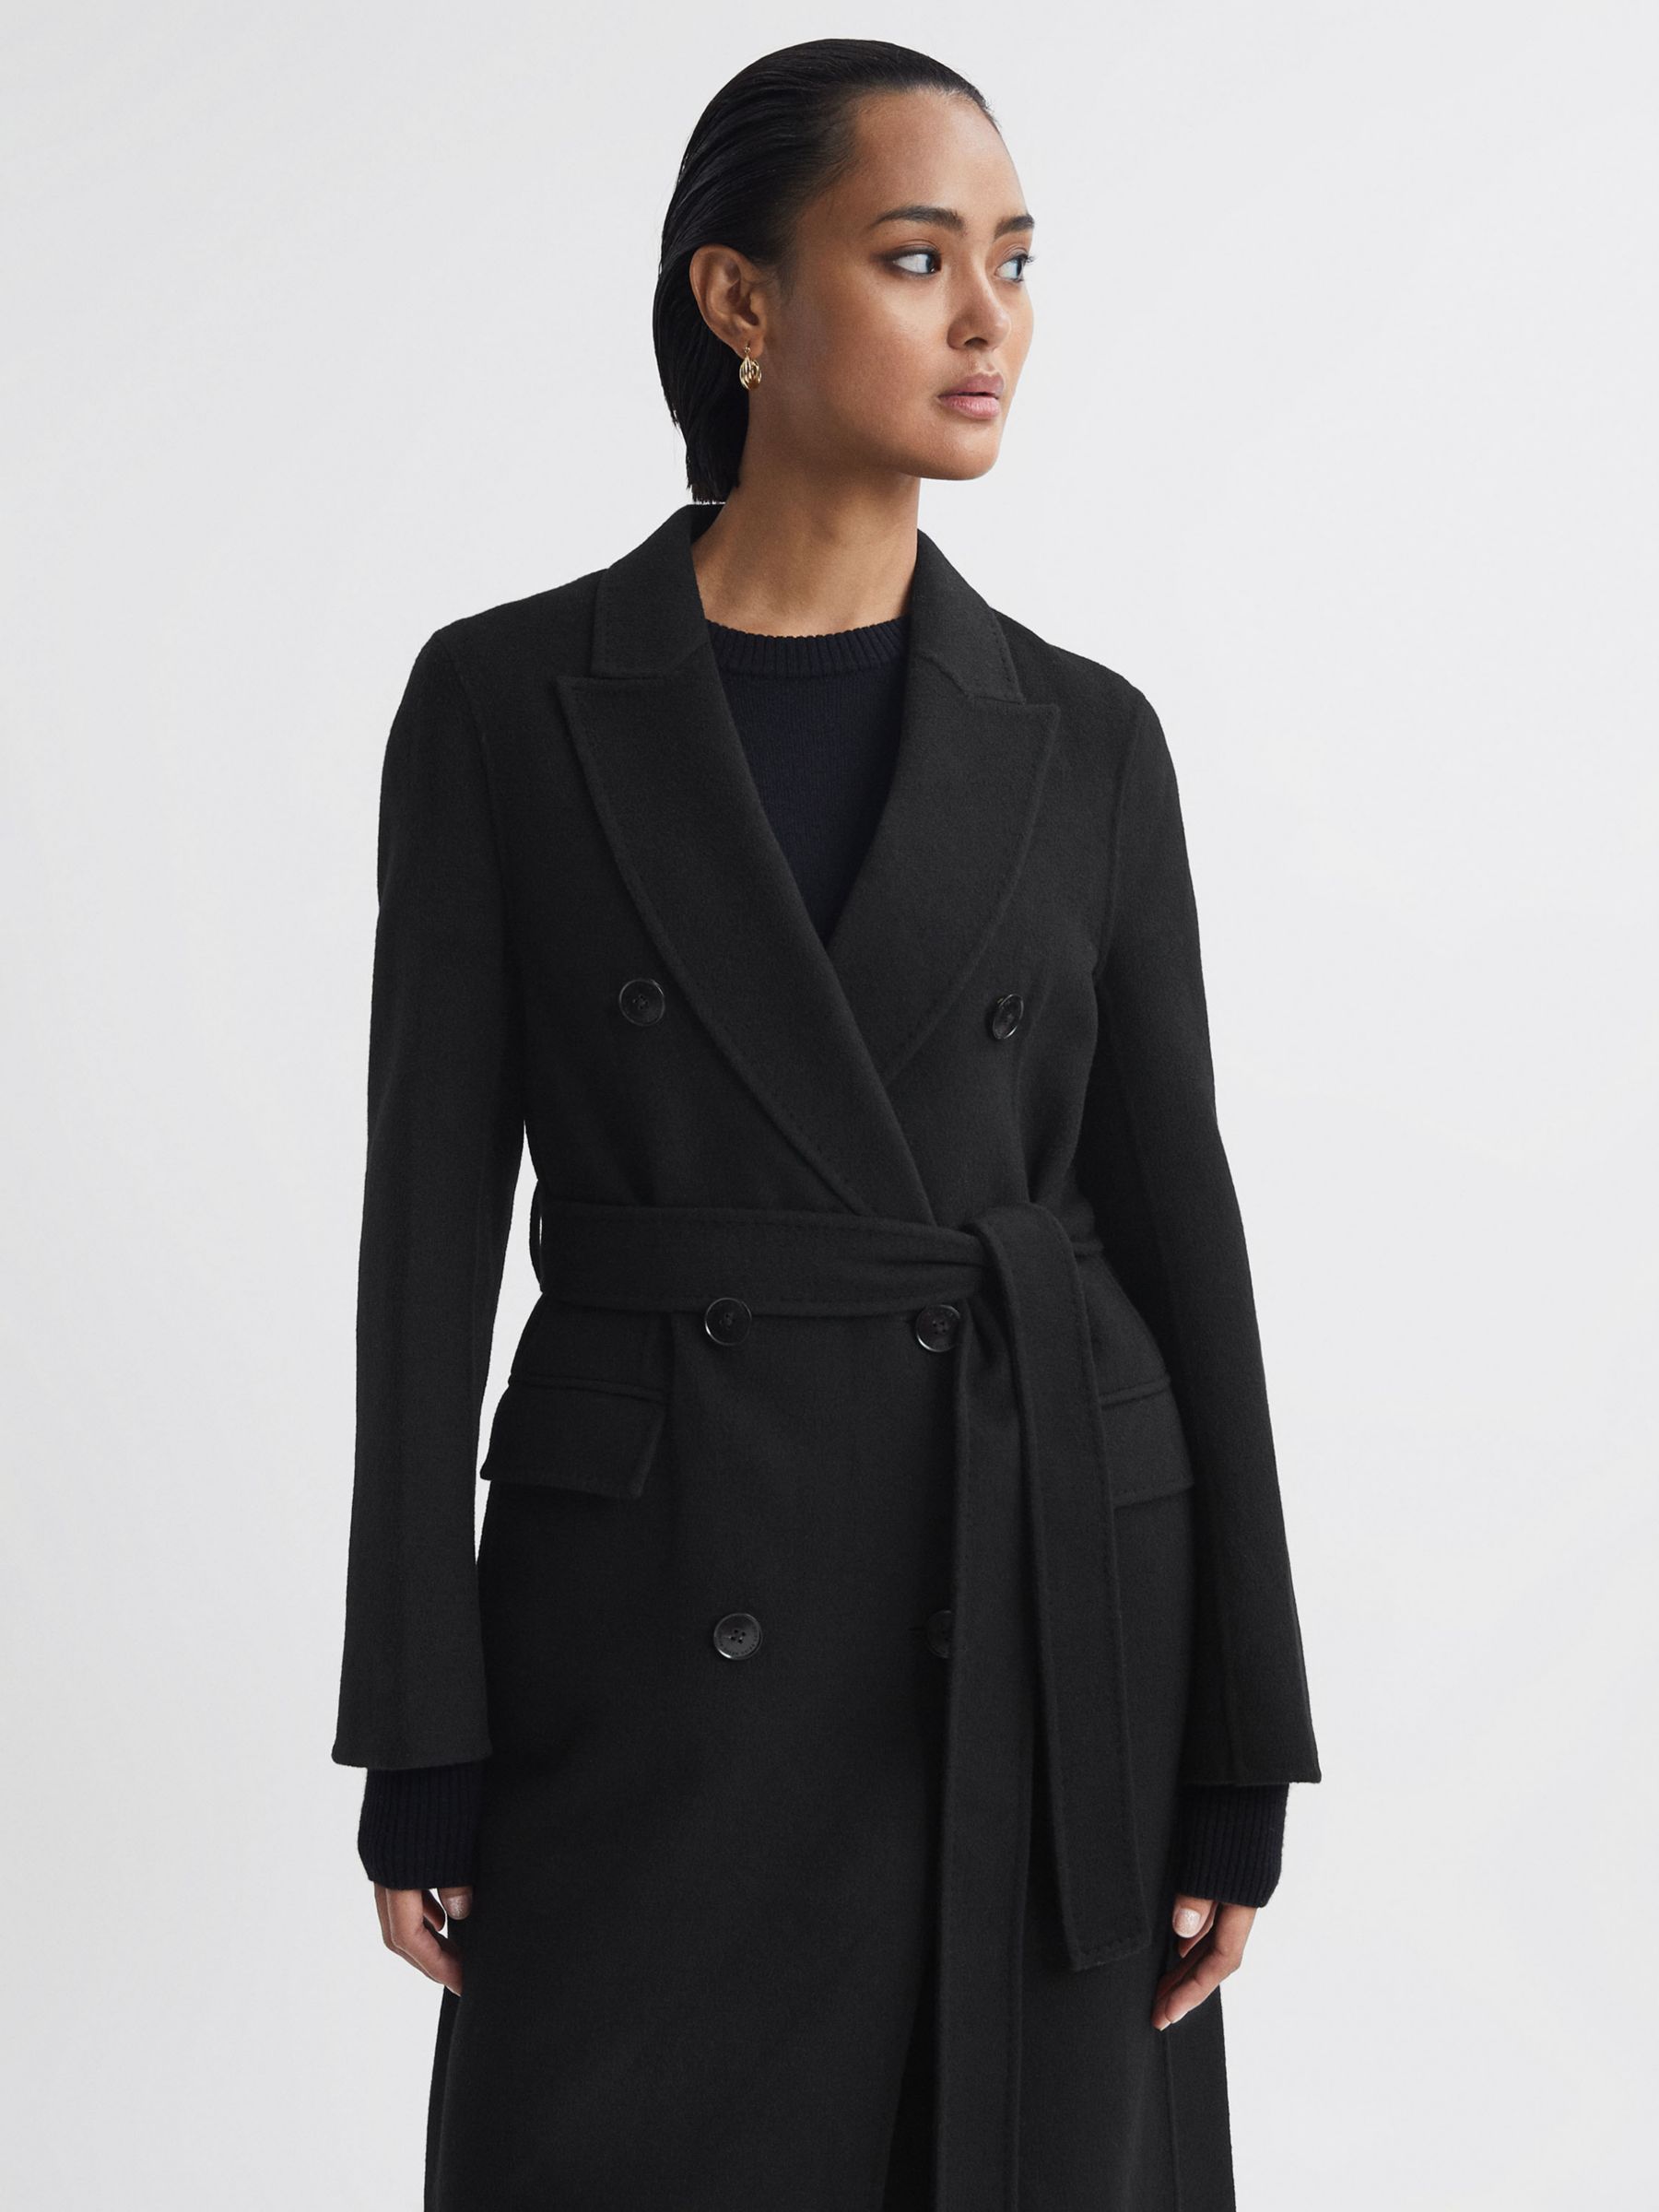 Reiss Arla Wool Blend Belted Coat, Black at John Lewis & Partners